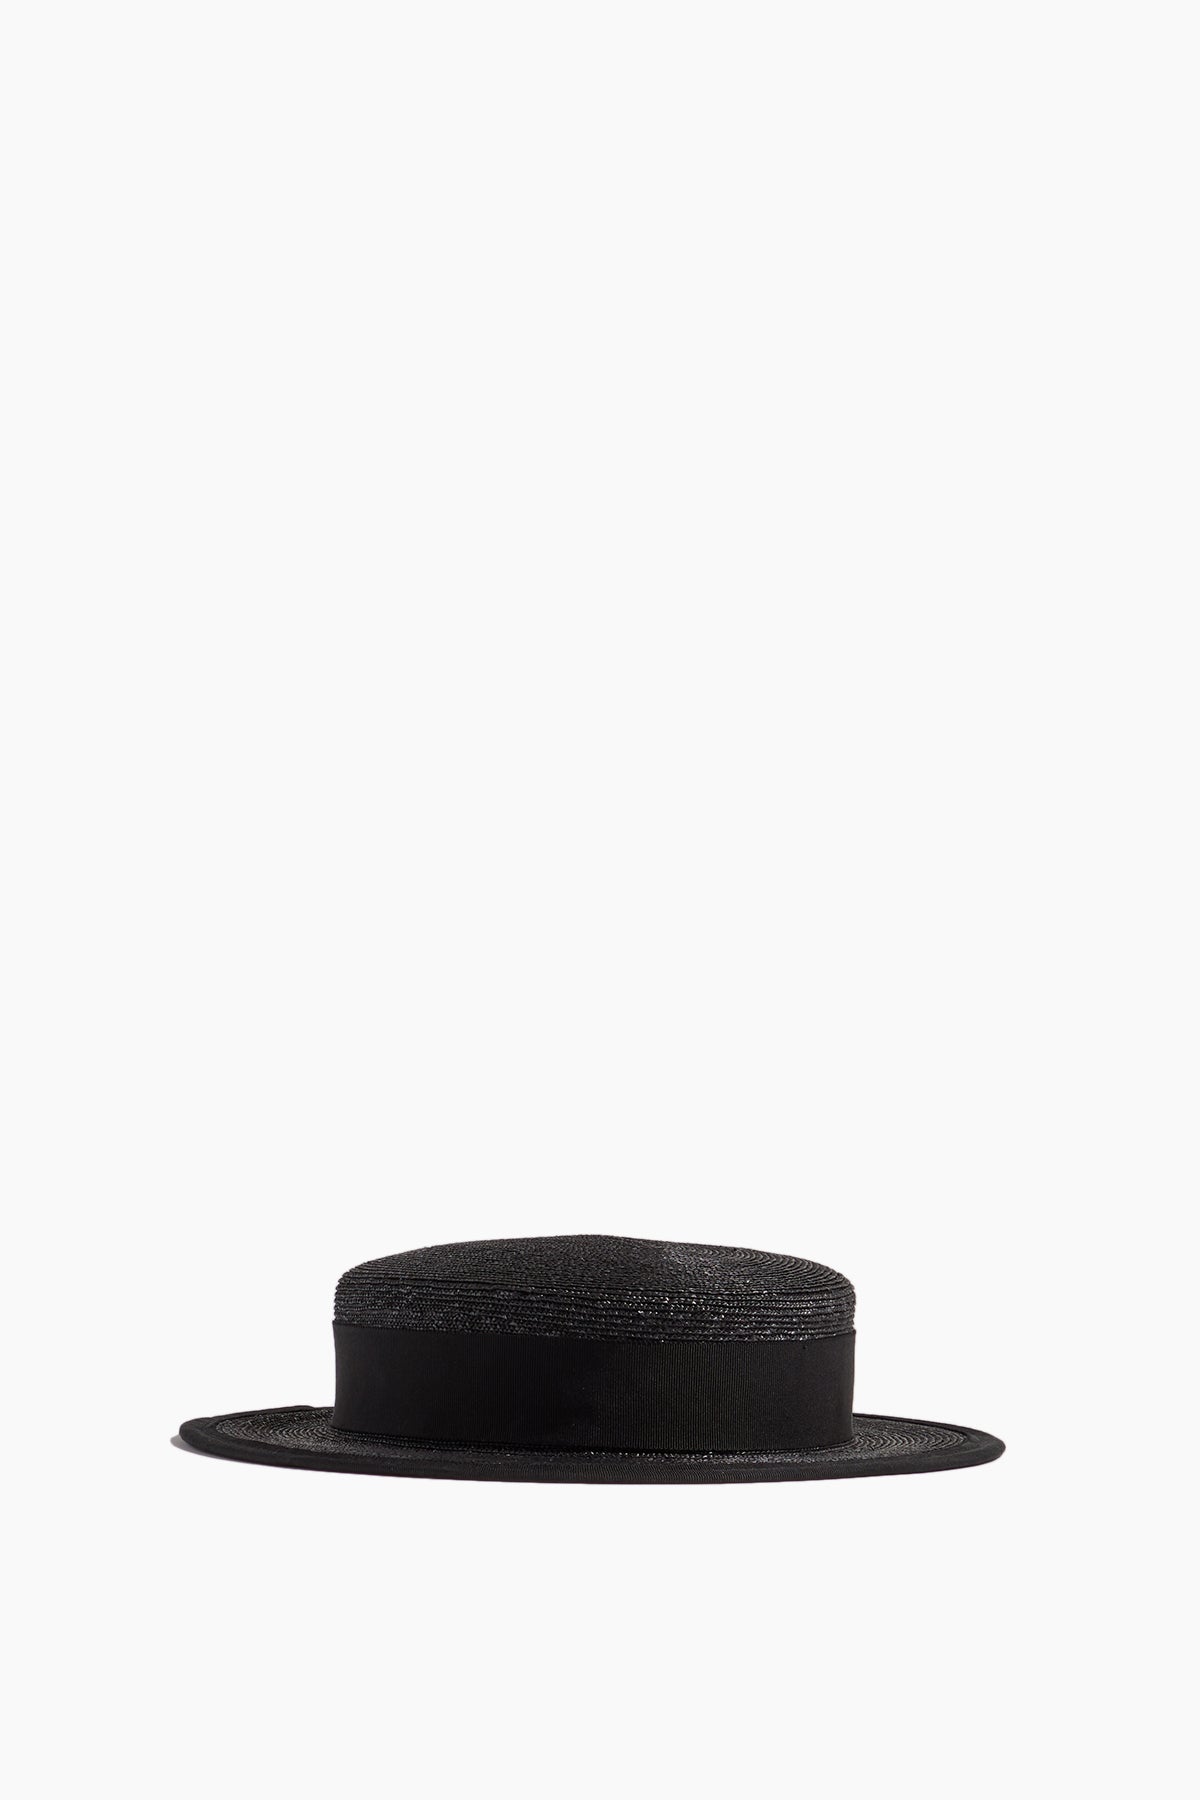 Gigi Burris Hats Bridgette Boater Hat in Black Gigi Burris Bridgette Boater Hat in Black